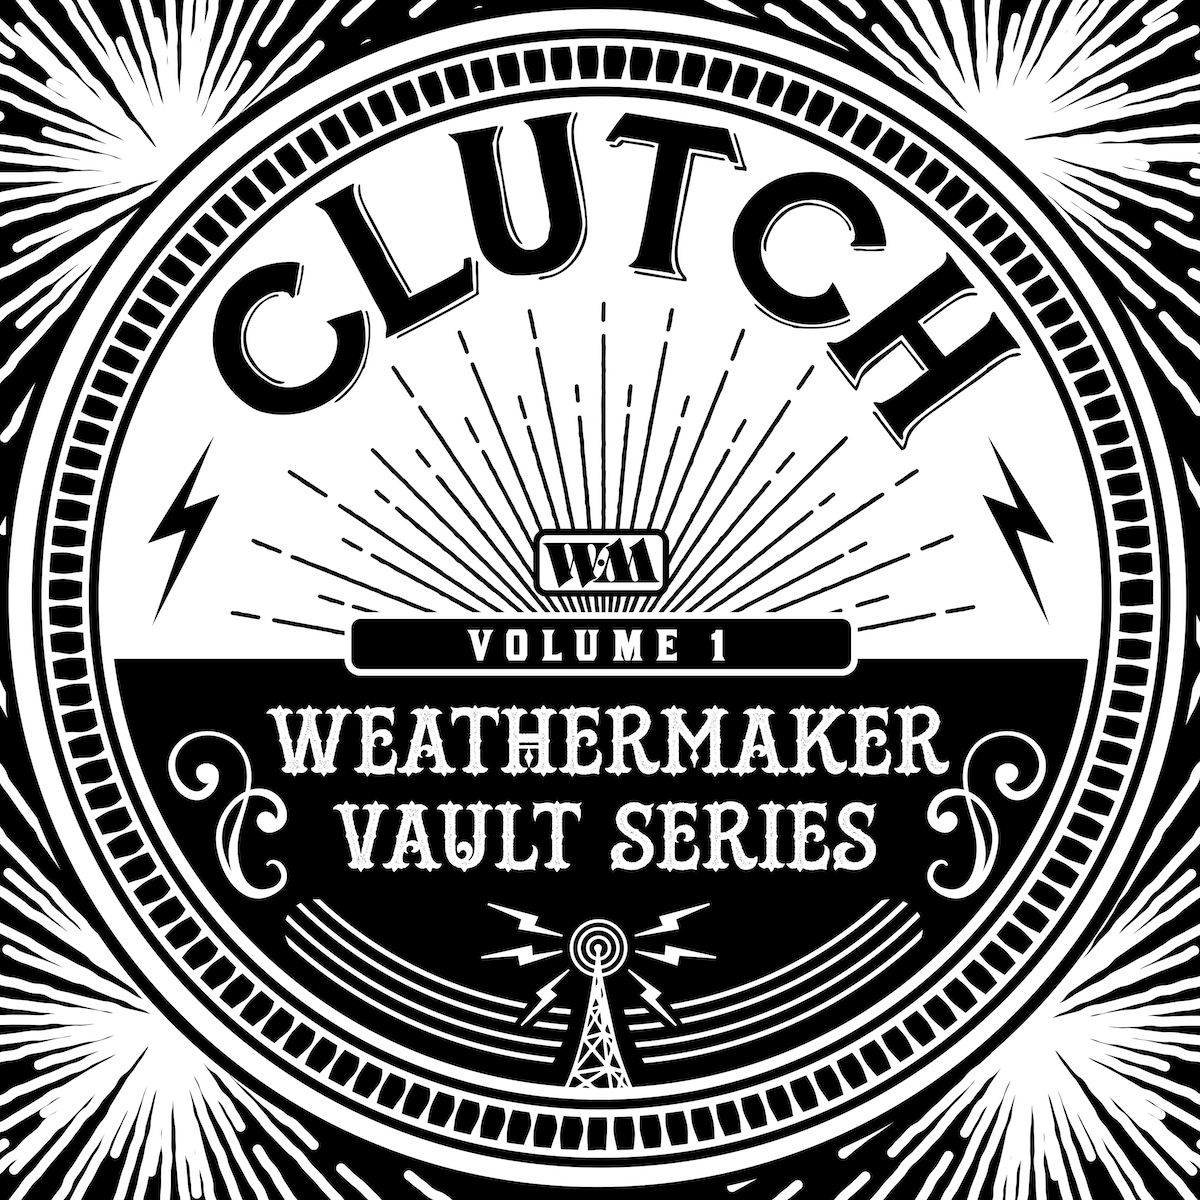 Clutch - Weathermaker Vault Series Vol. 1 (RSD2020 BF)- CD